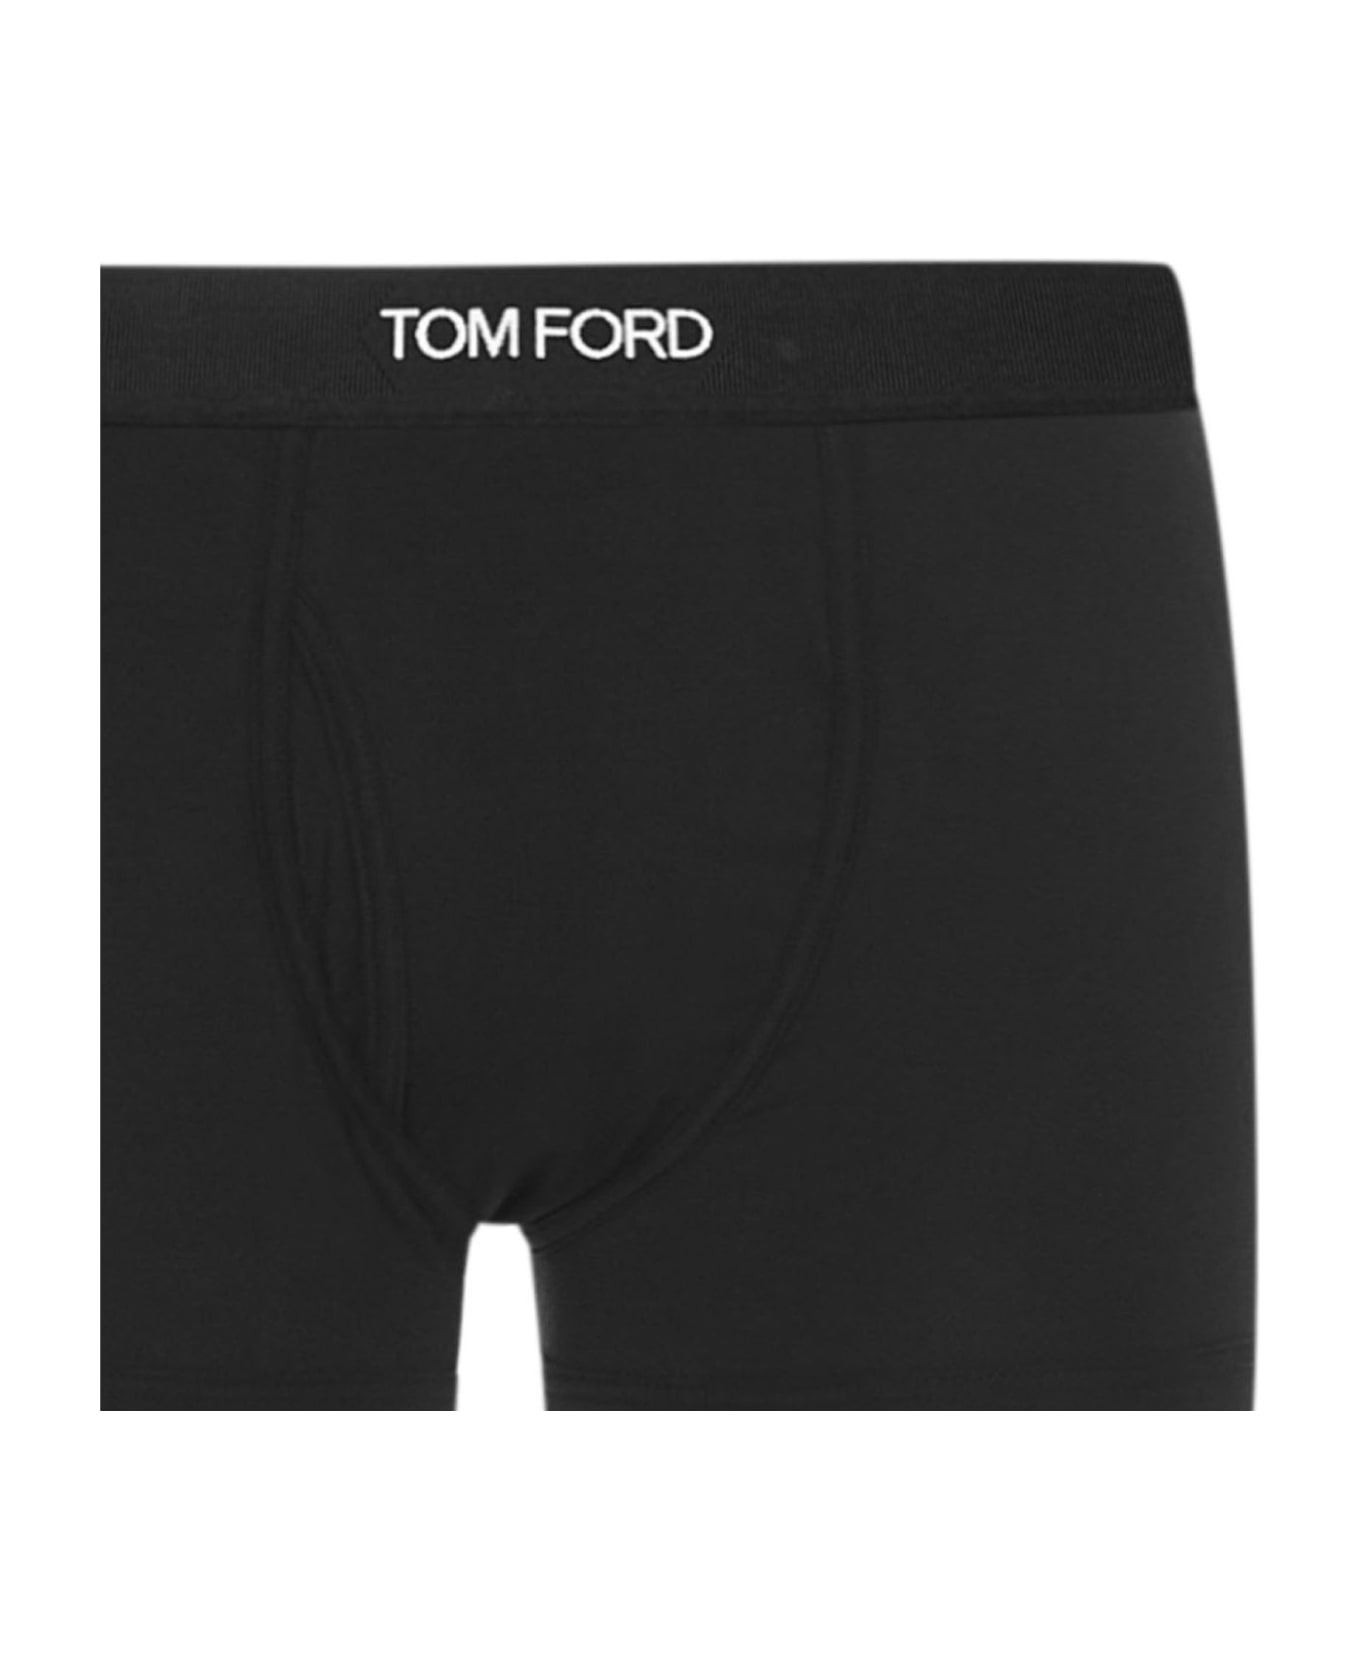 Tom Ford Elastic Logo Waist Boxer Shorts - Black ショーツ